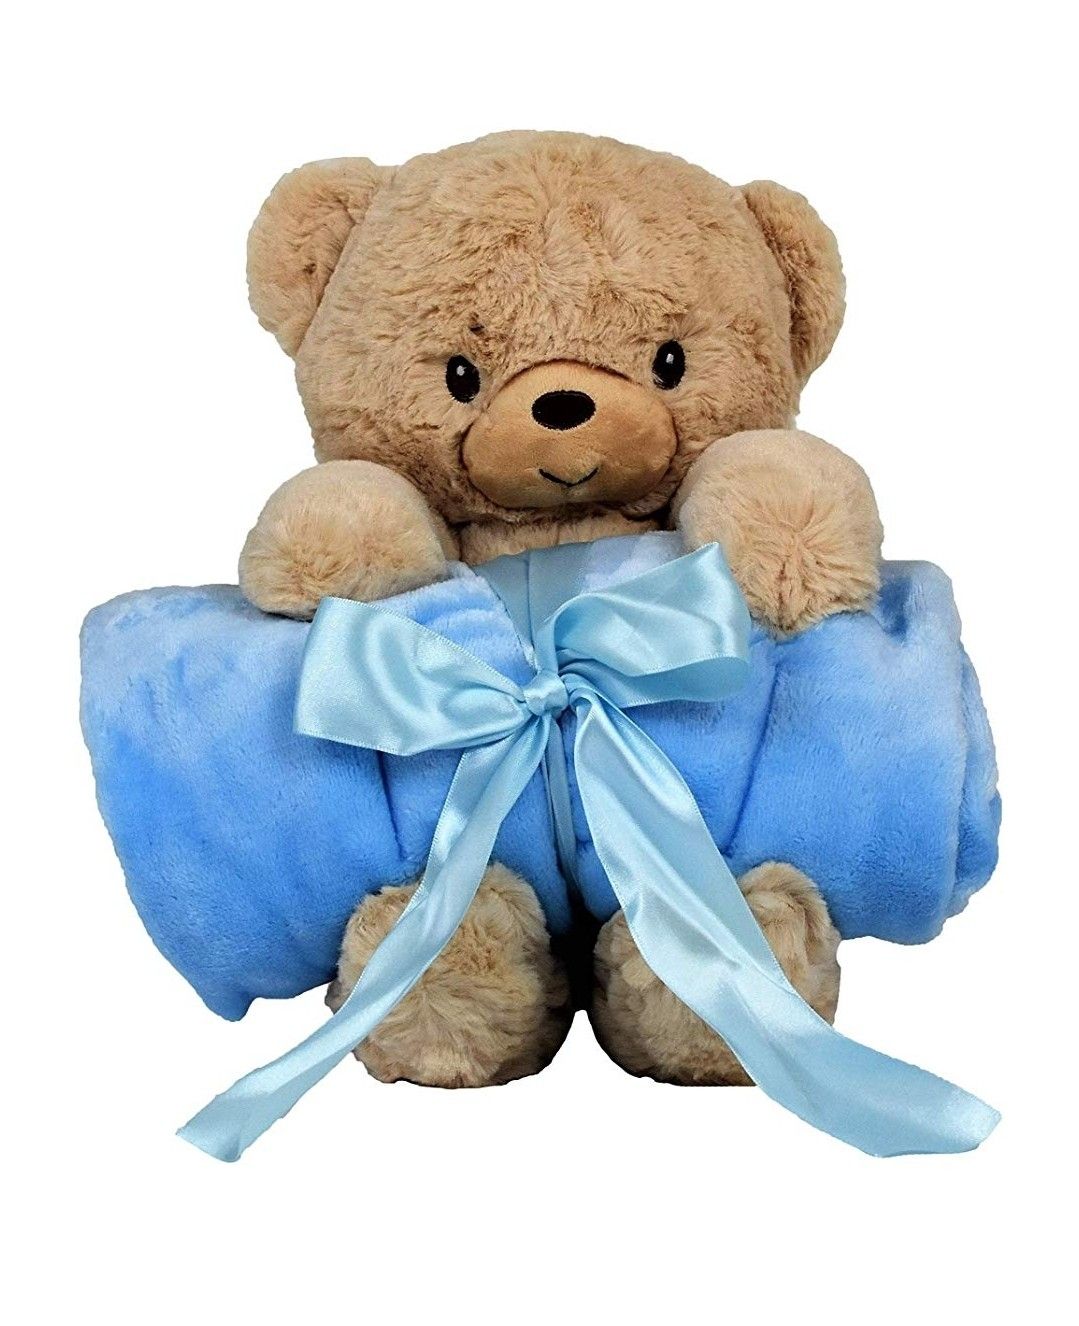 Stuffed Animal Blanket – Super Soft 37” x 30” Blue Baby Boy Blanket and Teddy Bear 2-in-1 Combo – Perfect Teddy Bear Blanket